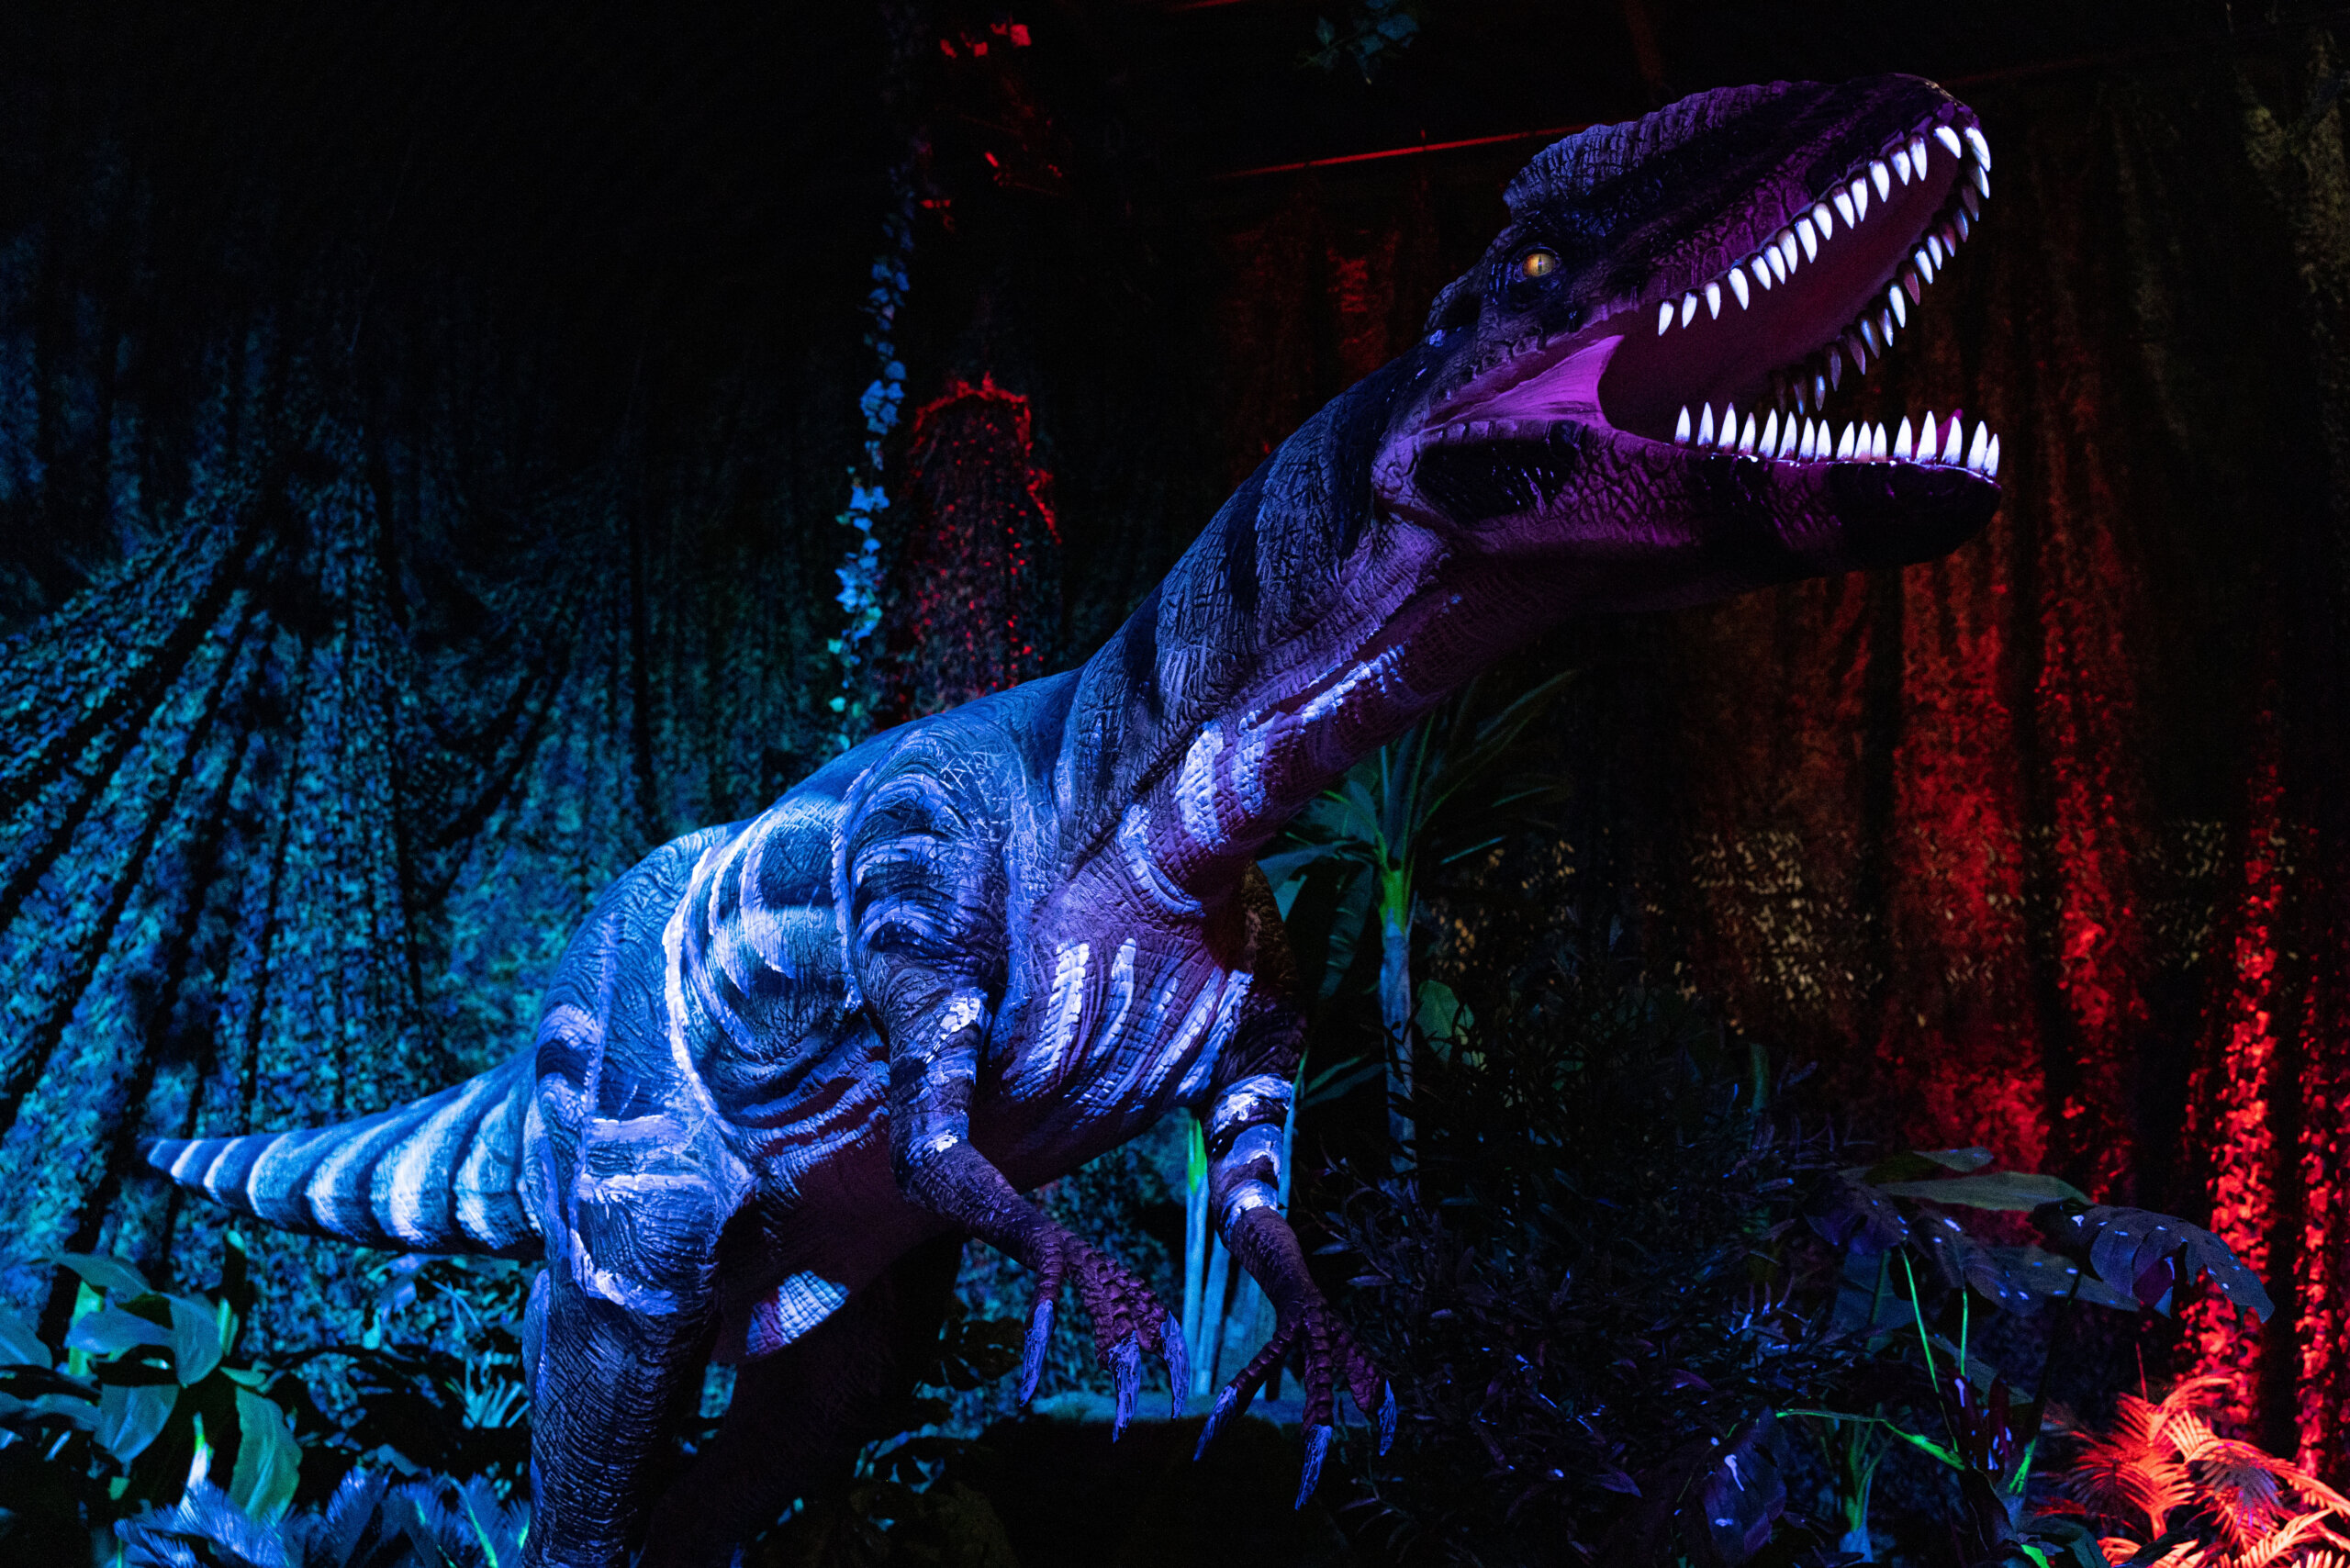 Dinos Alive Exhibit Schenectady: An Immersive Experience